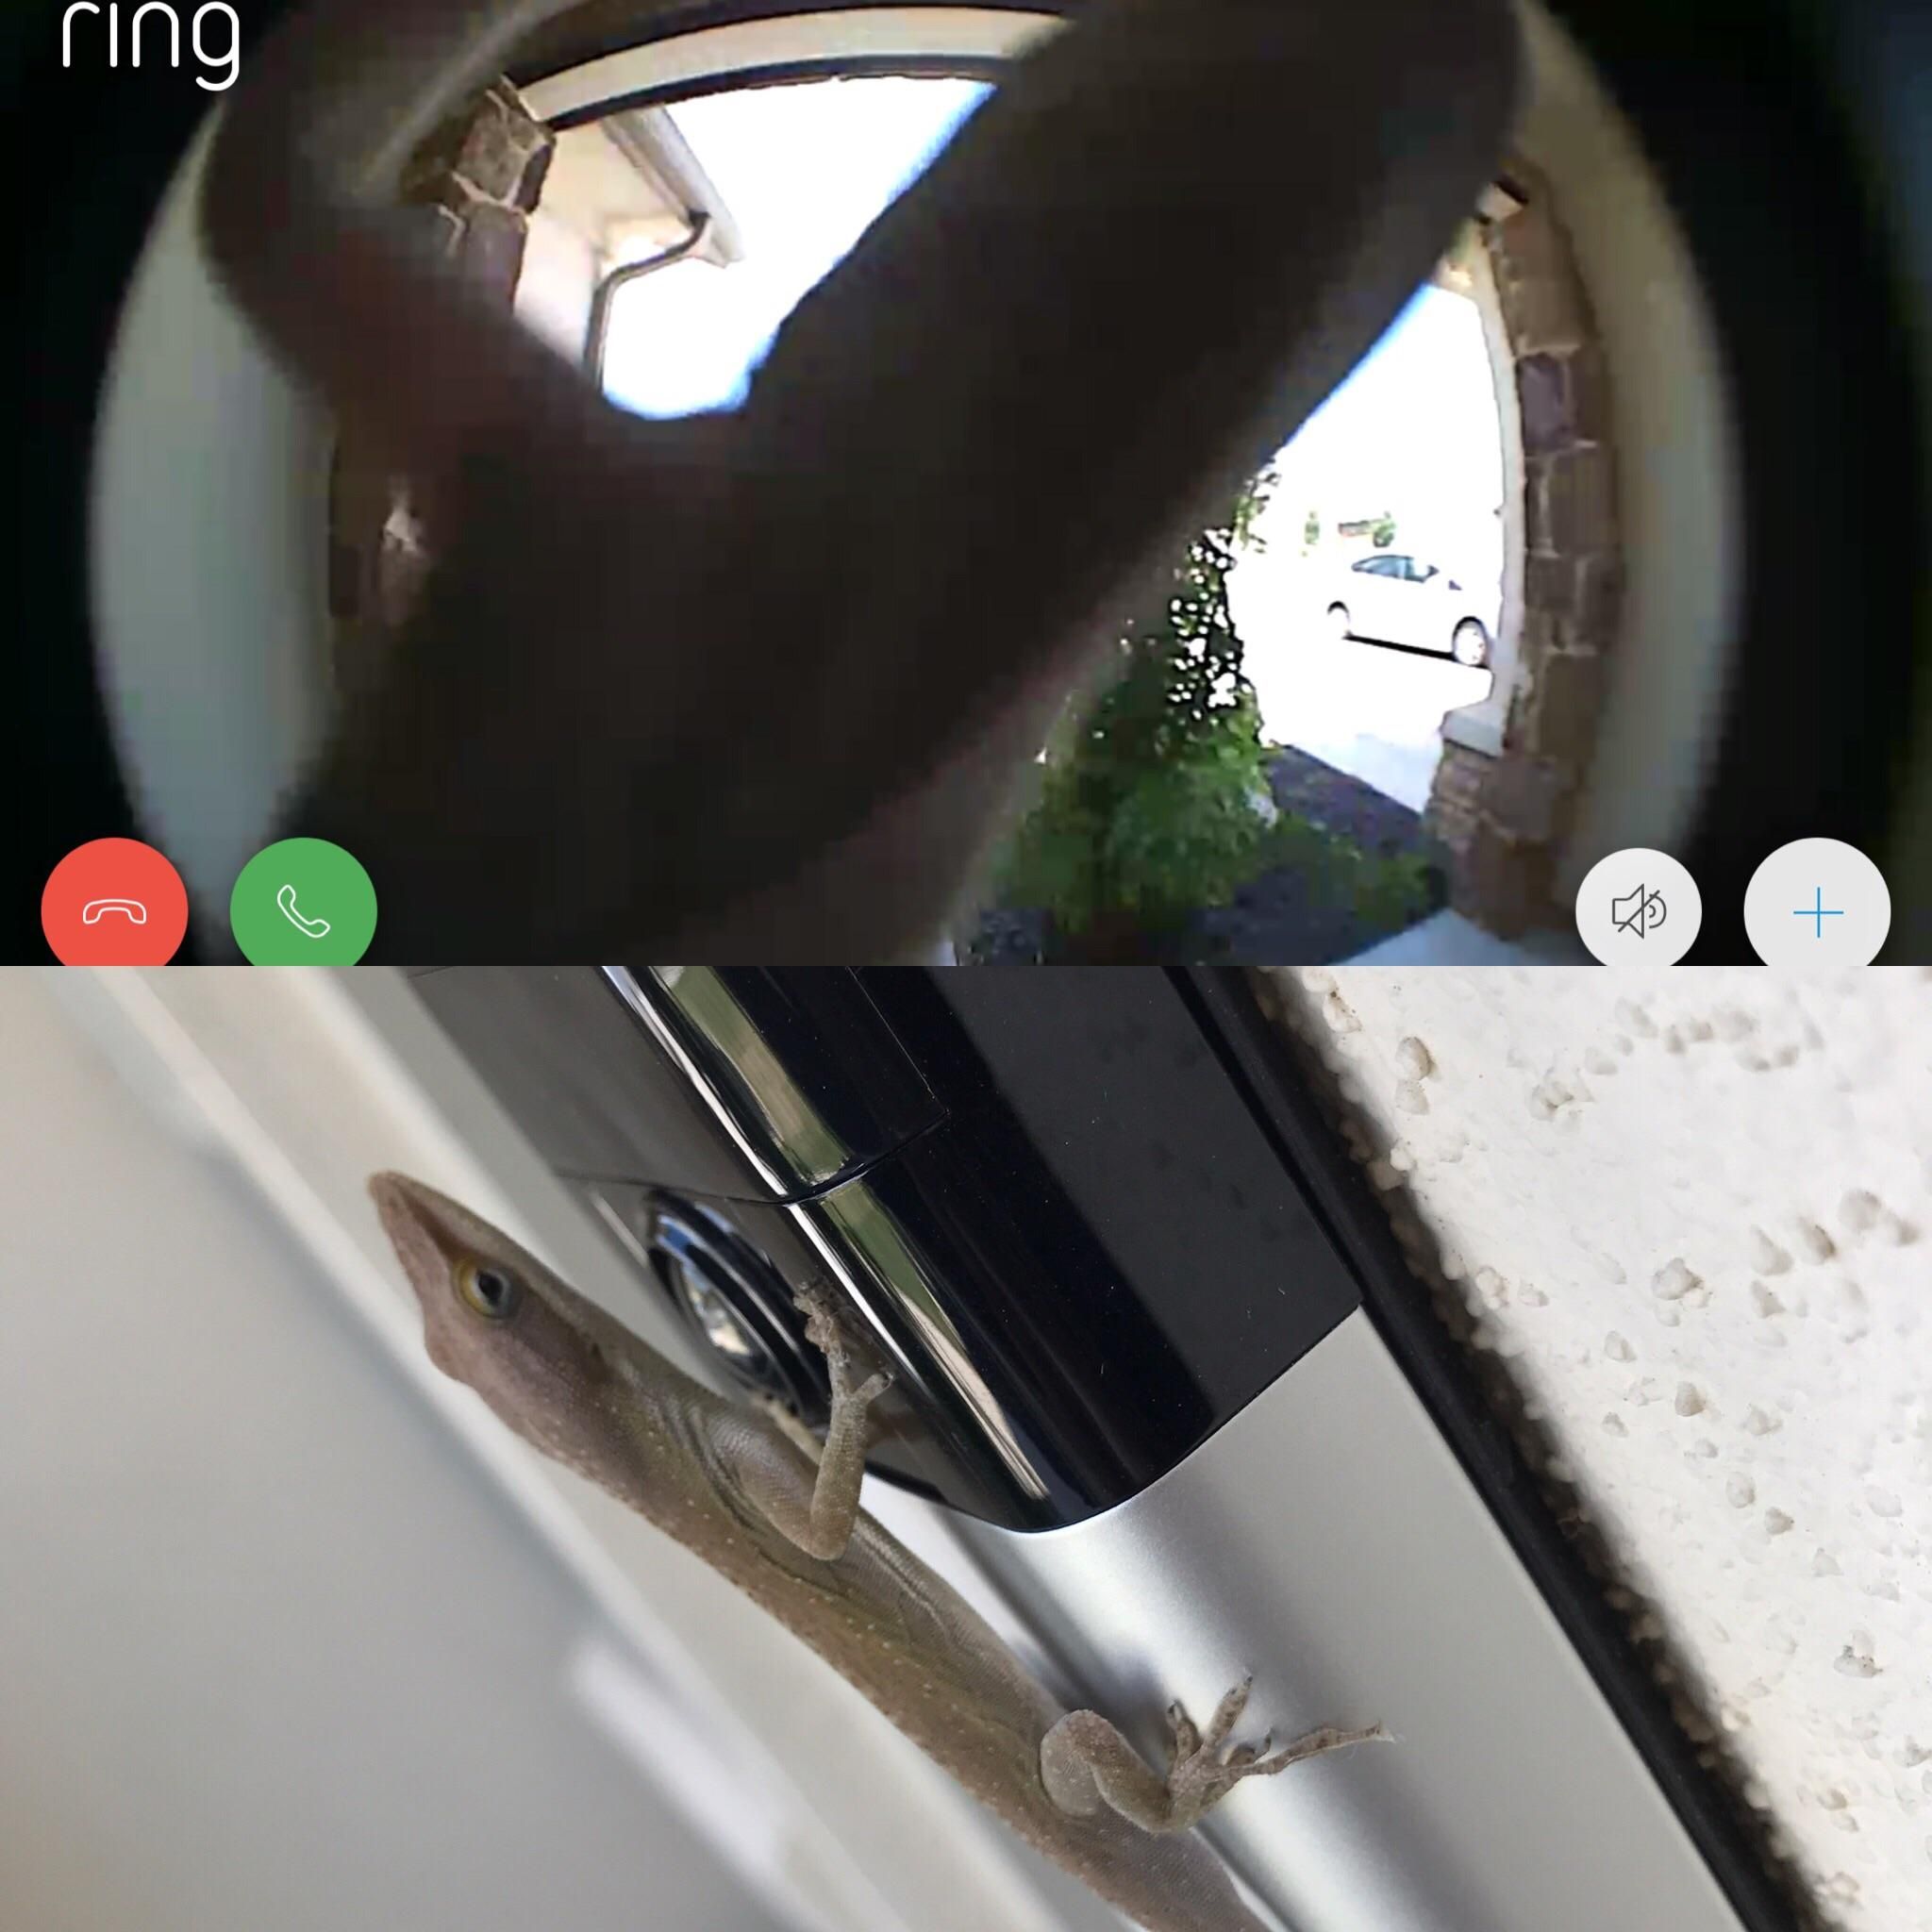 This guy keeps ringing my doorbell!